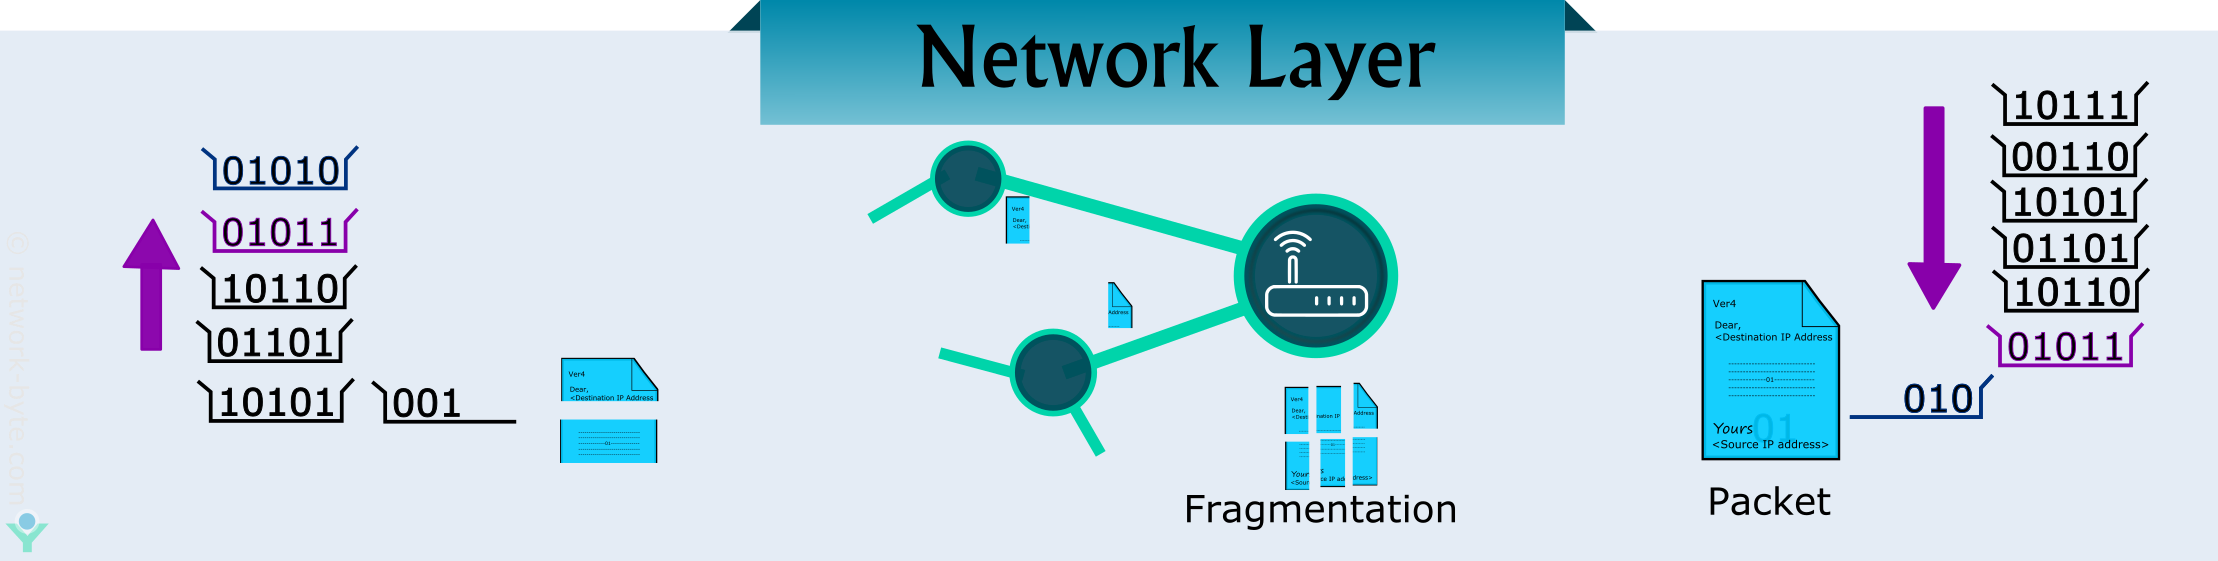 network layer in osi model